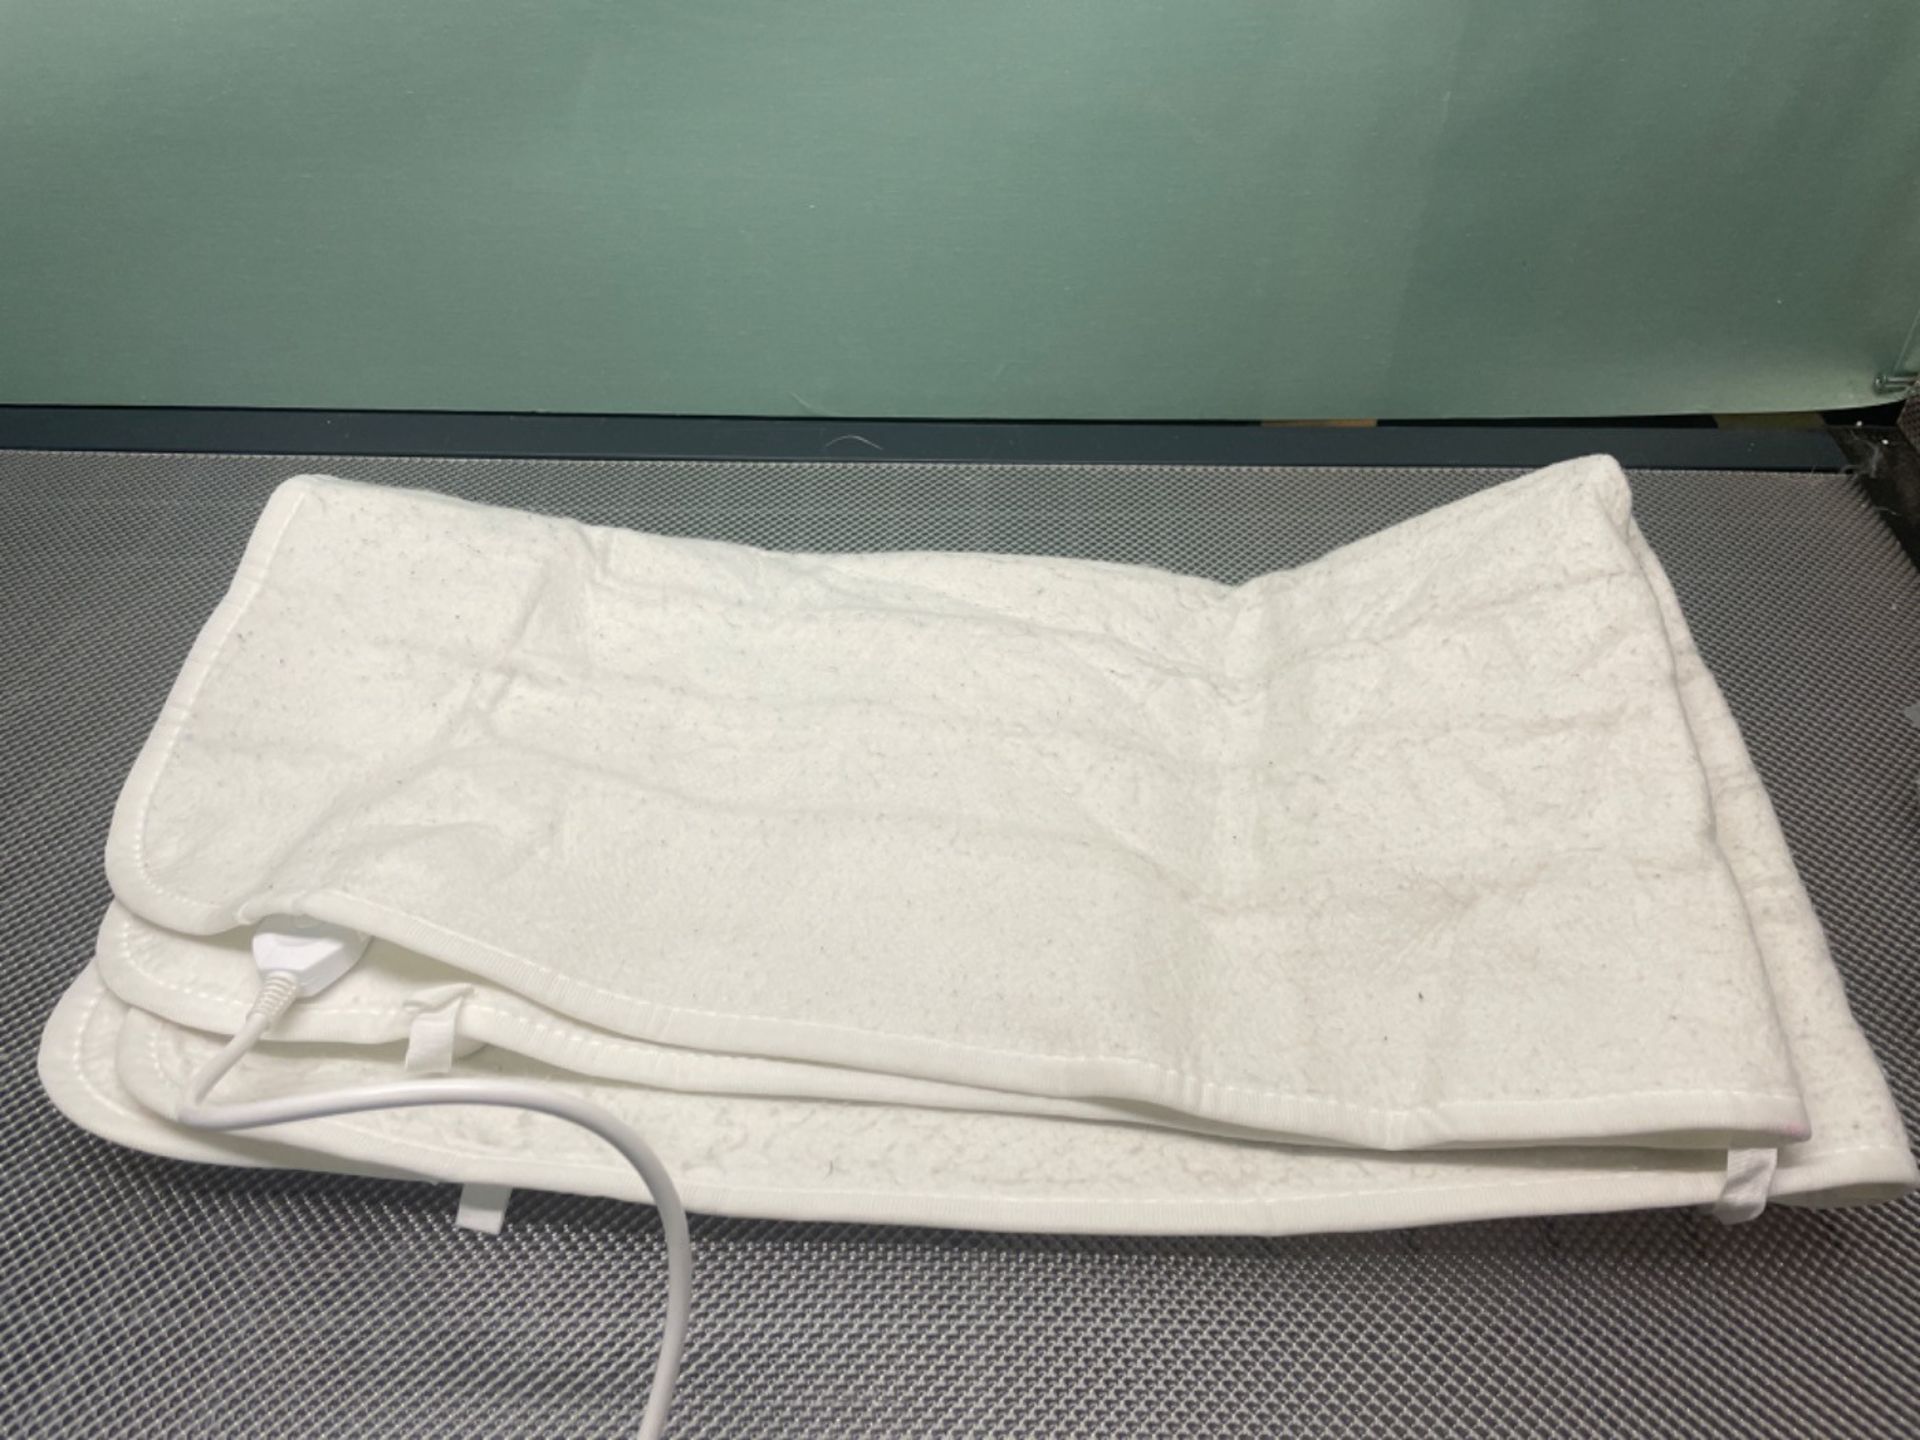 Cozytek Single Polyester Electric Blanket Size Detachable Control Underblanket 3 Heat Settings Whit - Image 2 of 3